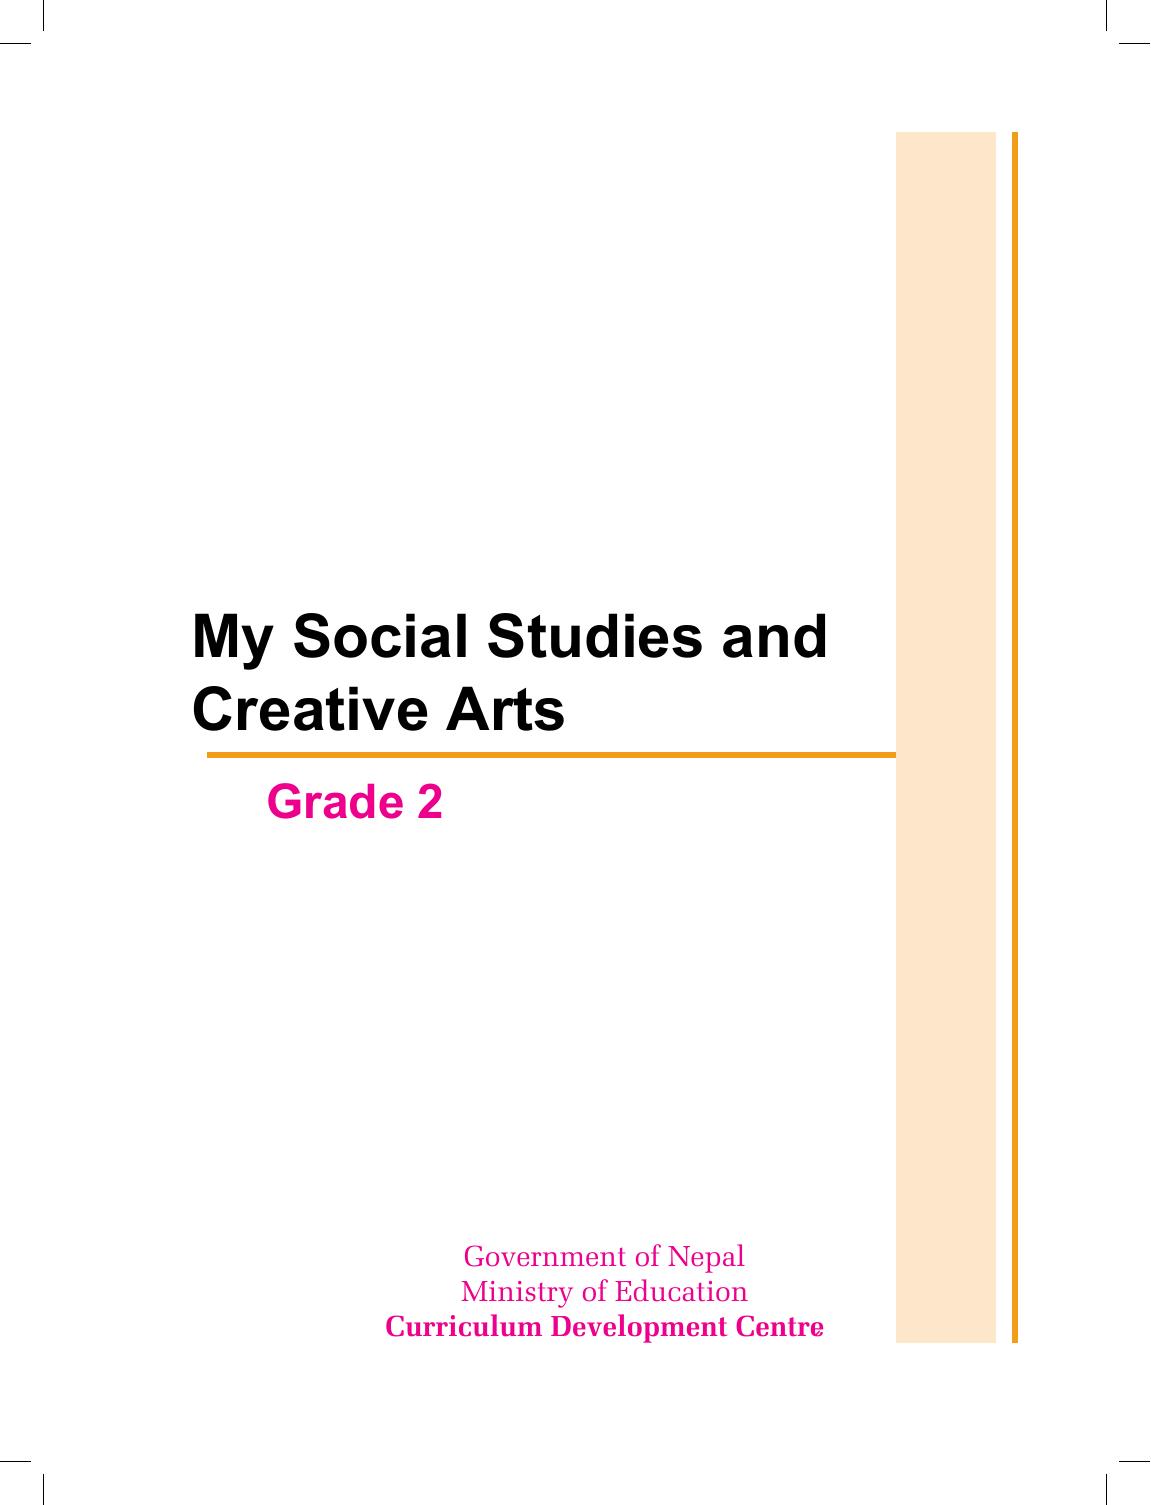 My Social Studies and Creative Arts Grade 2